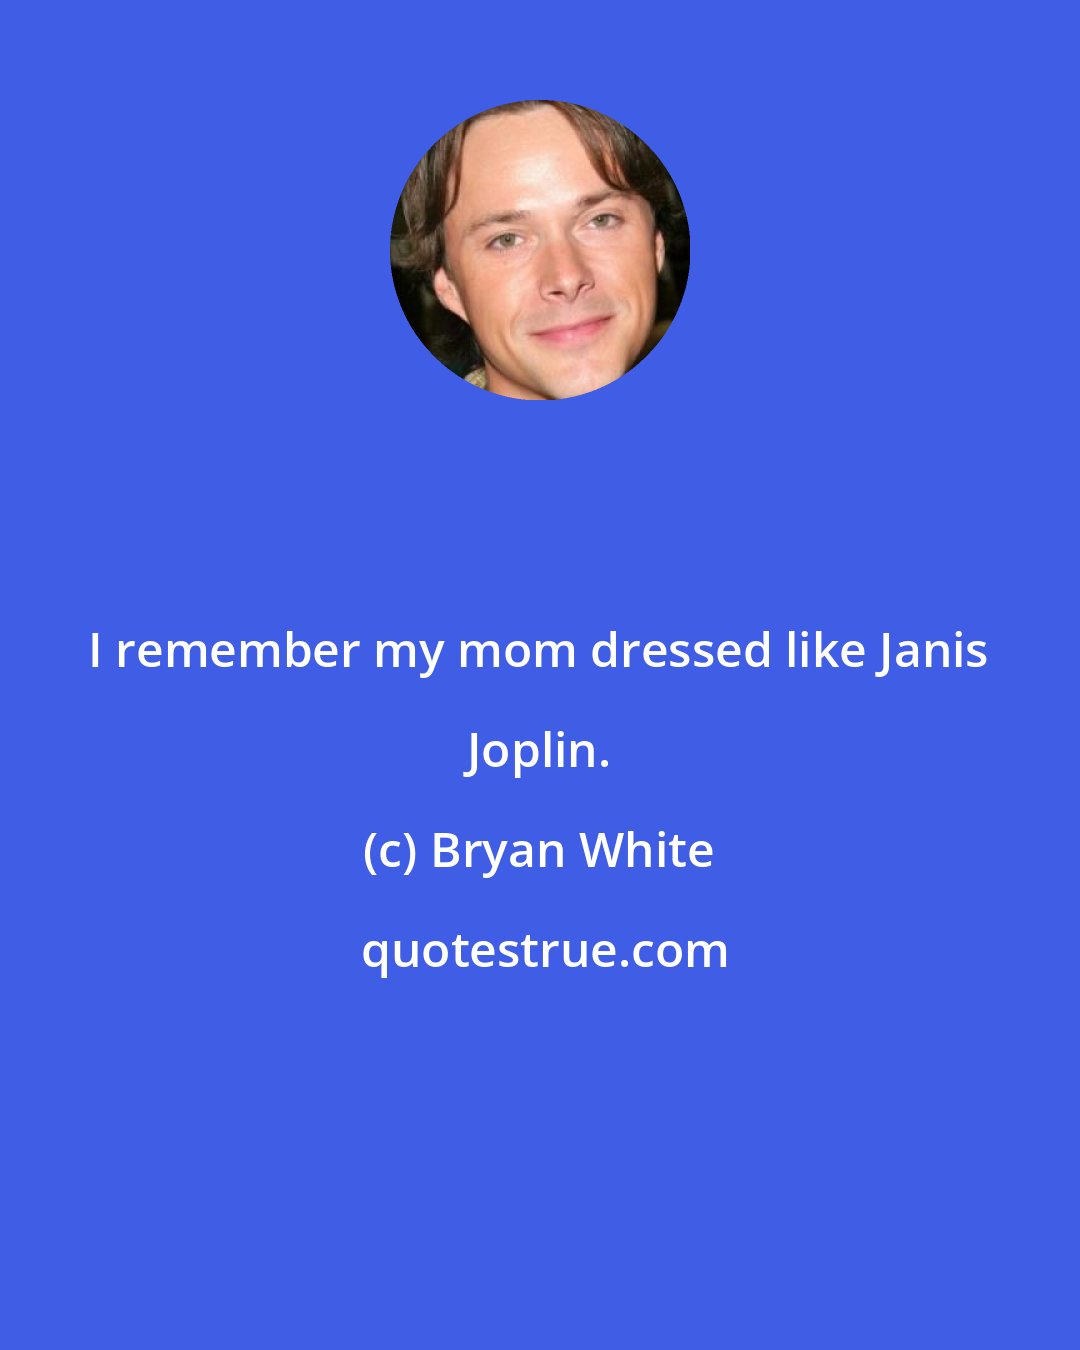 Bryan White: I remember my mom dressed like Janis Joplin.